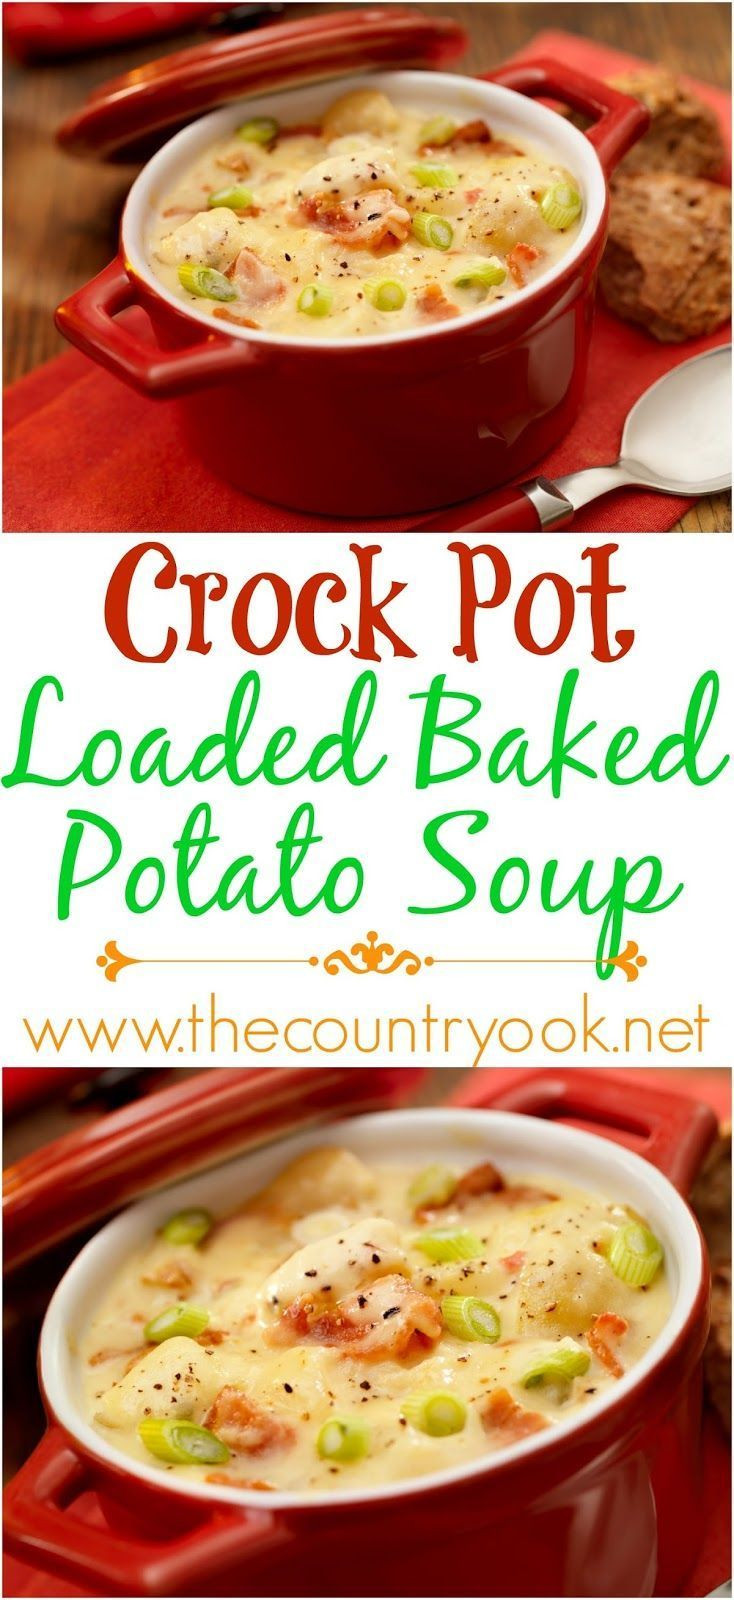 Loaded Baked Potato Soup Recipe
 Crock Pot Loaded Baked Potato Soup recipe from The Country